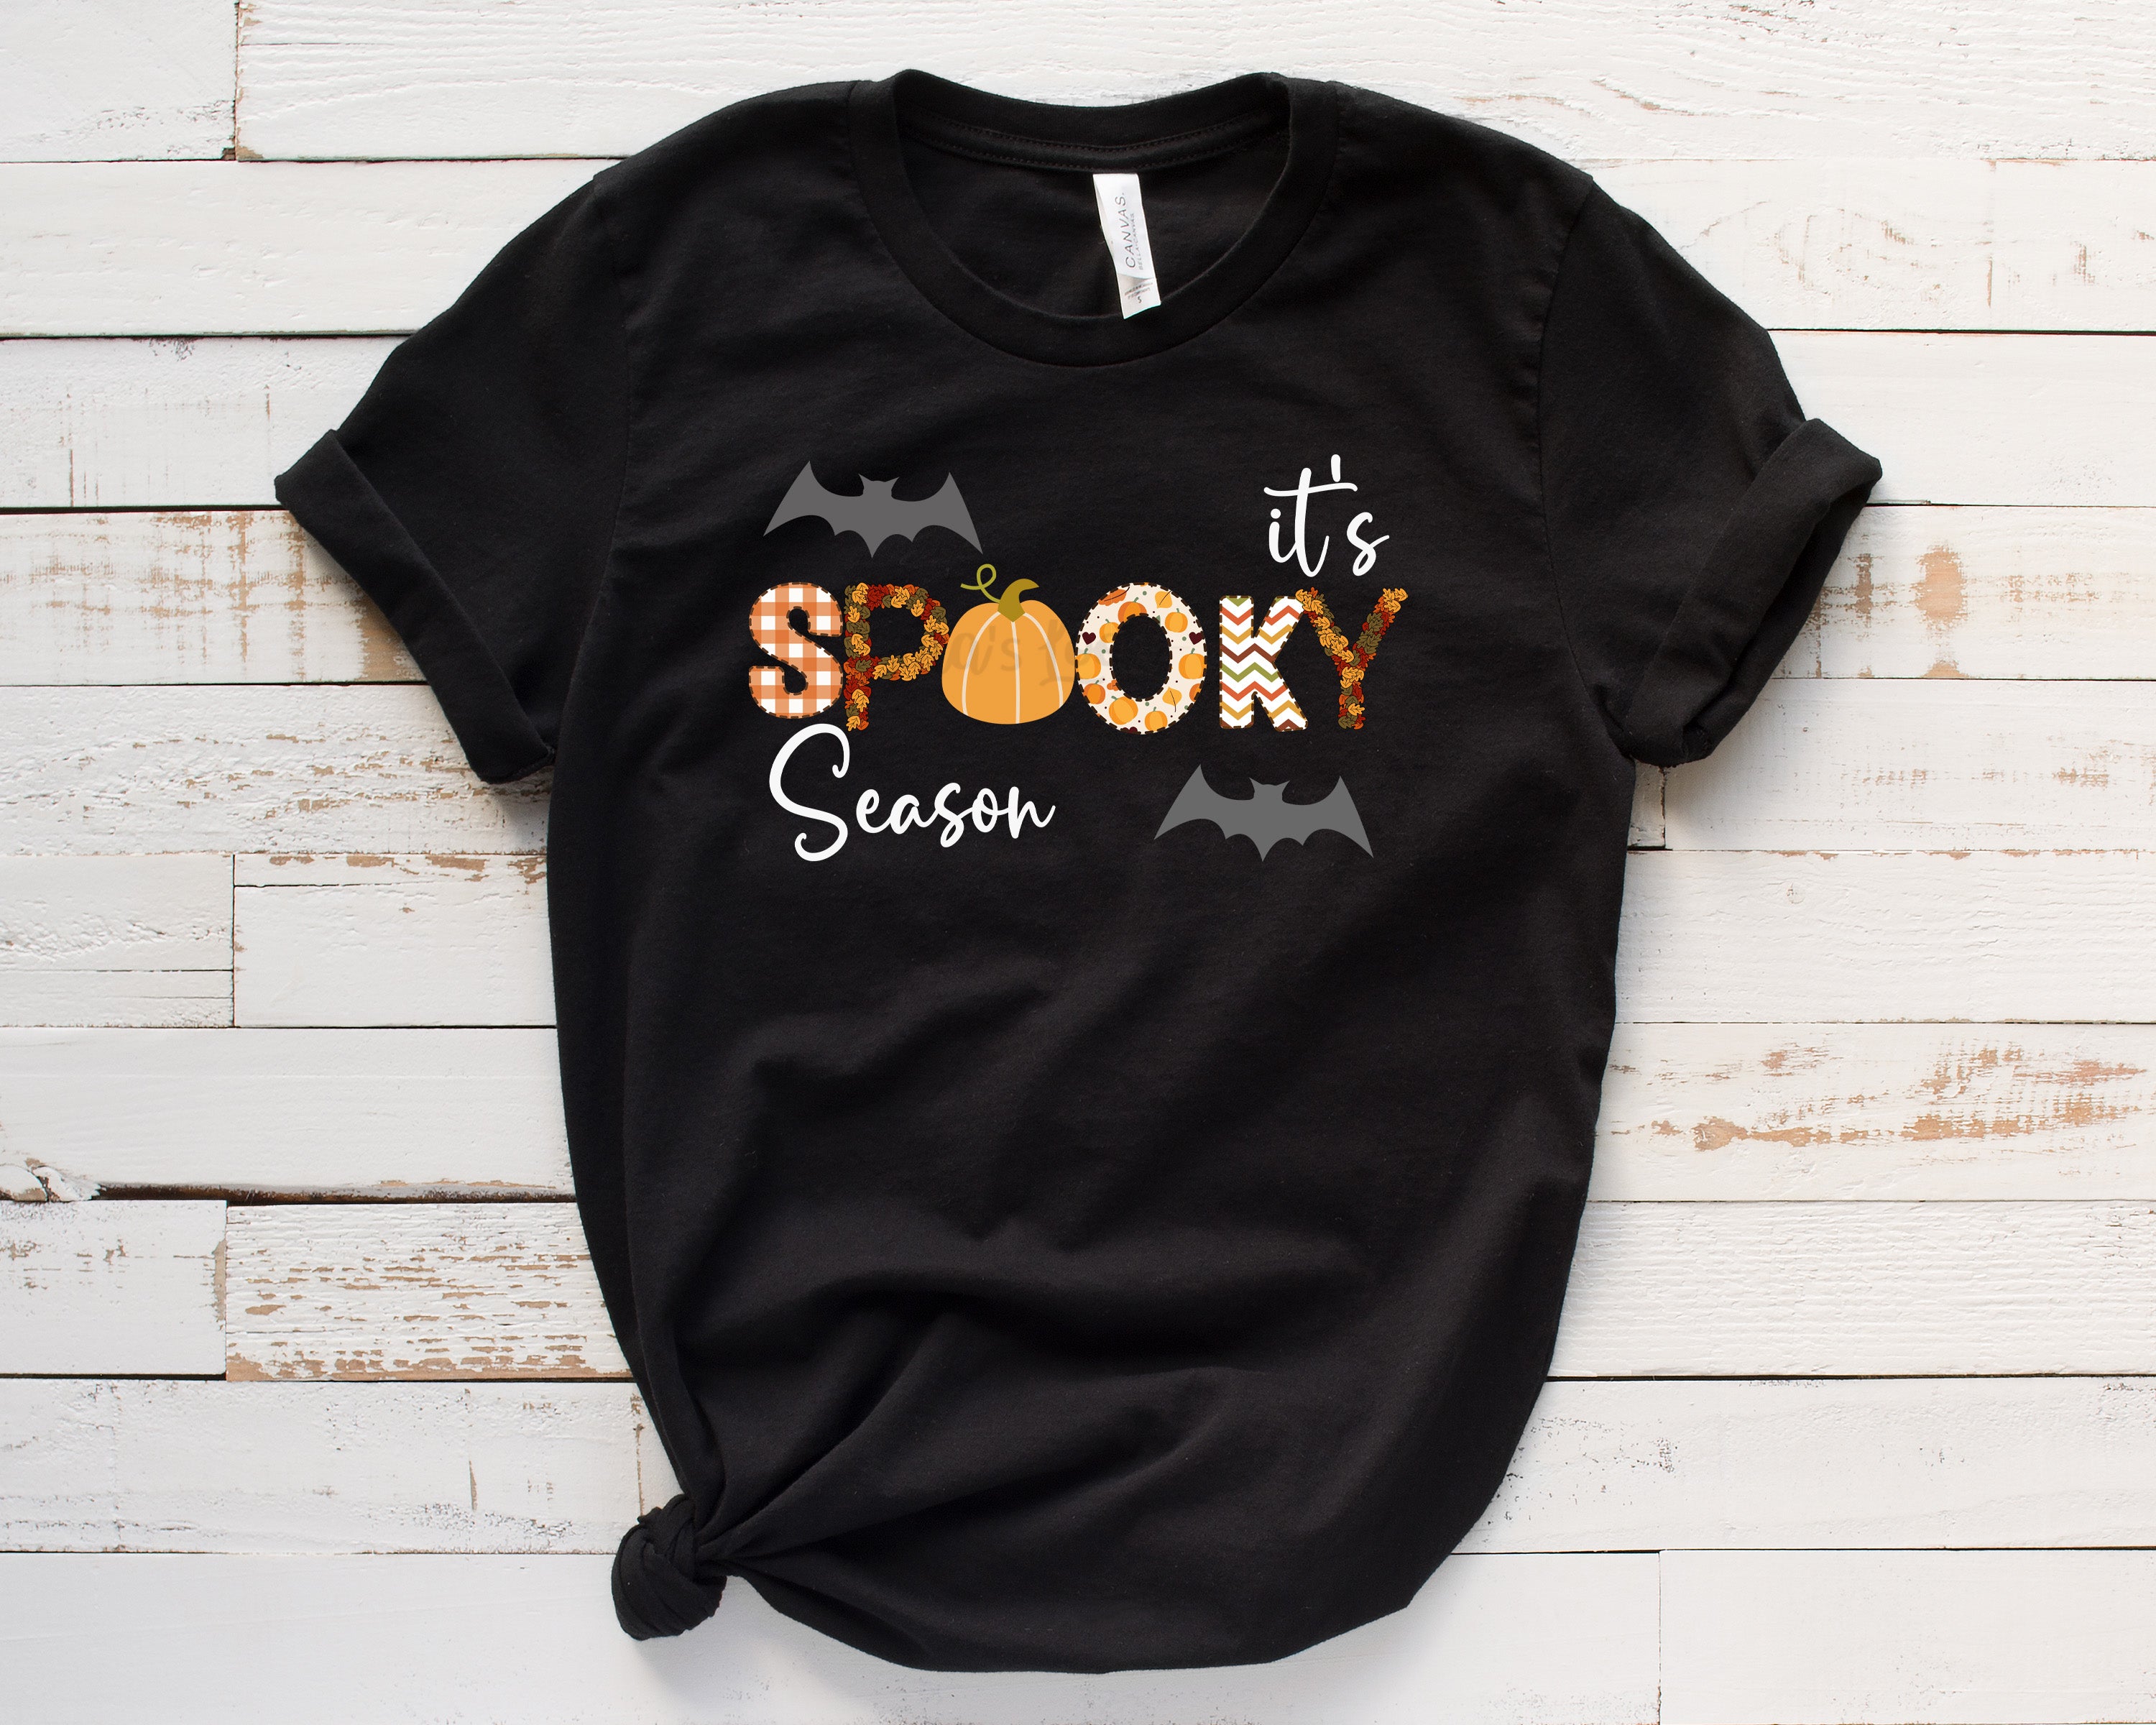 It's spooky season black shirt